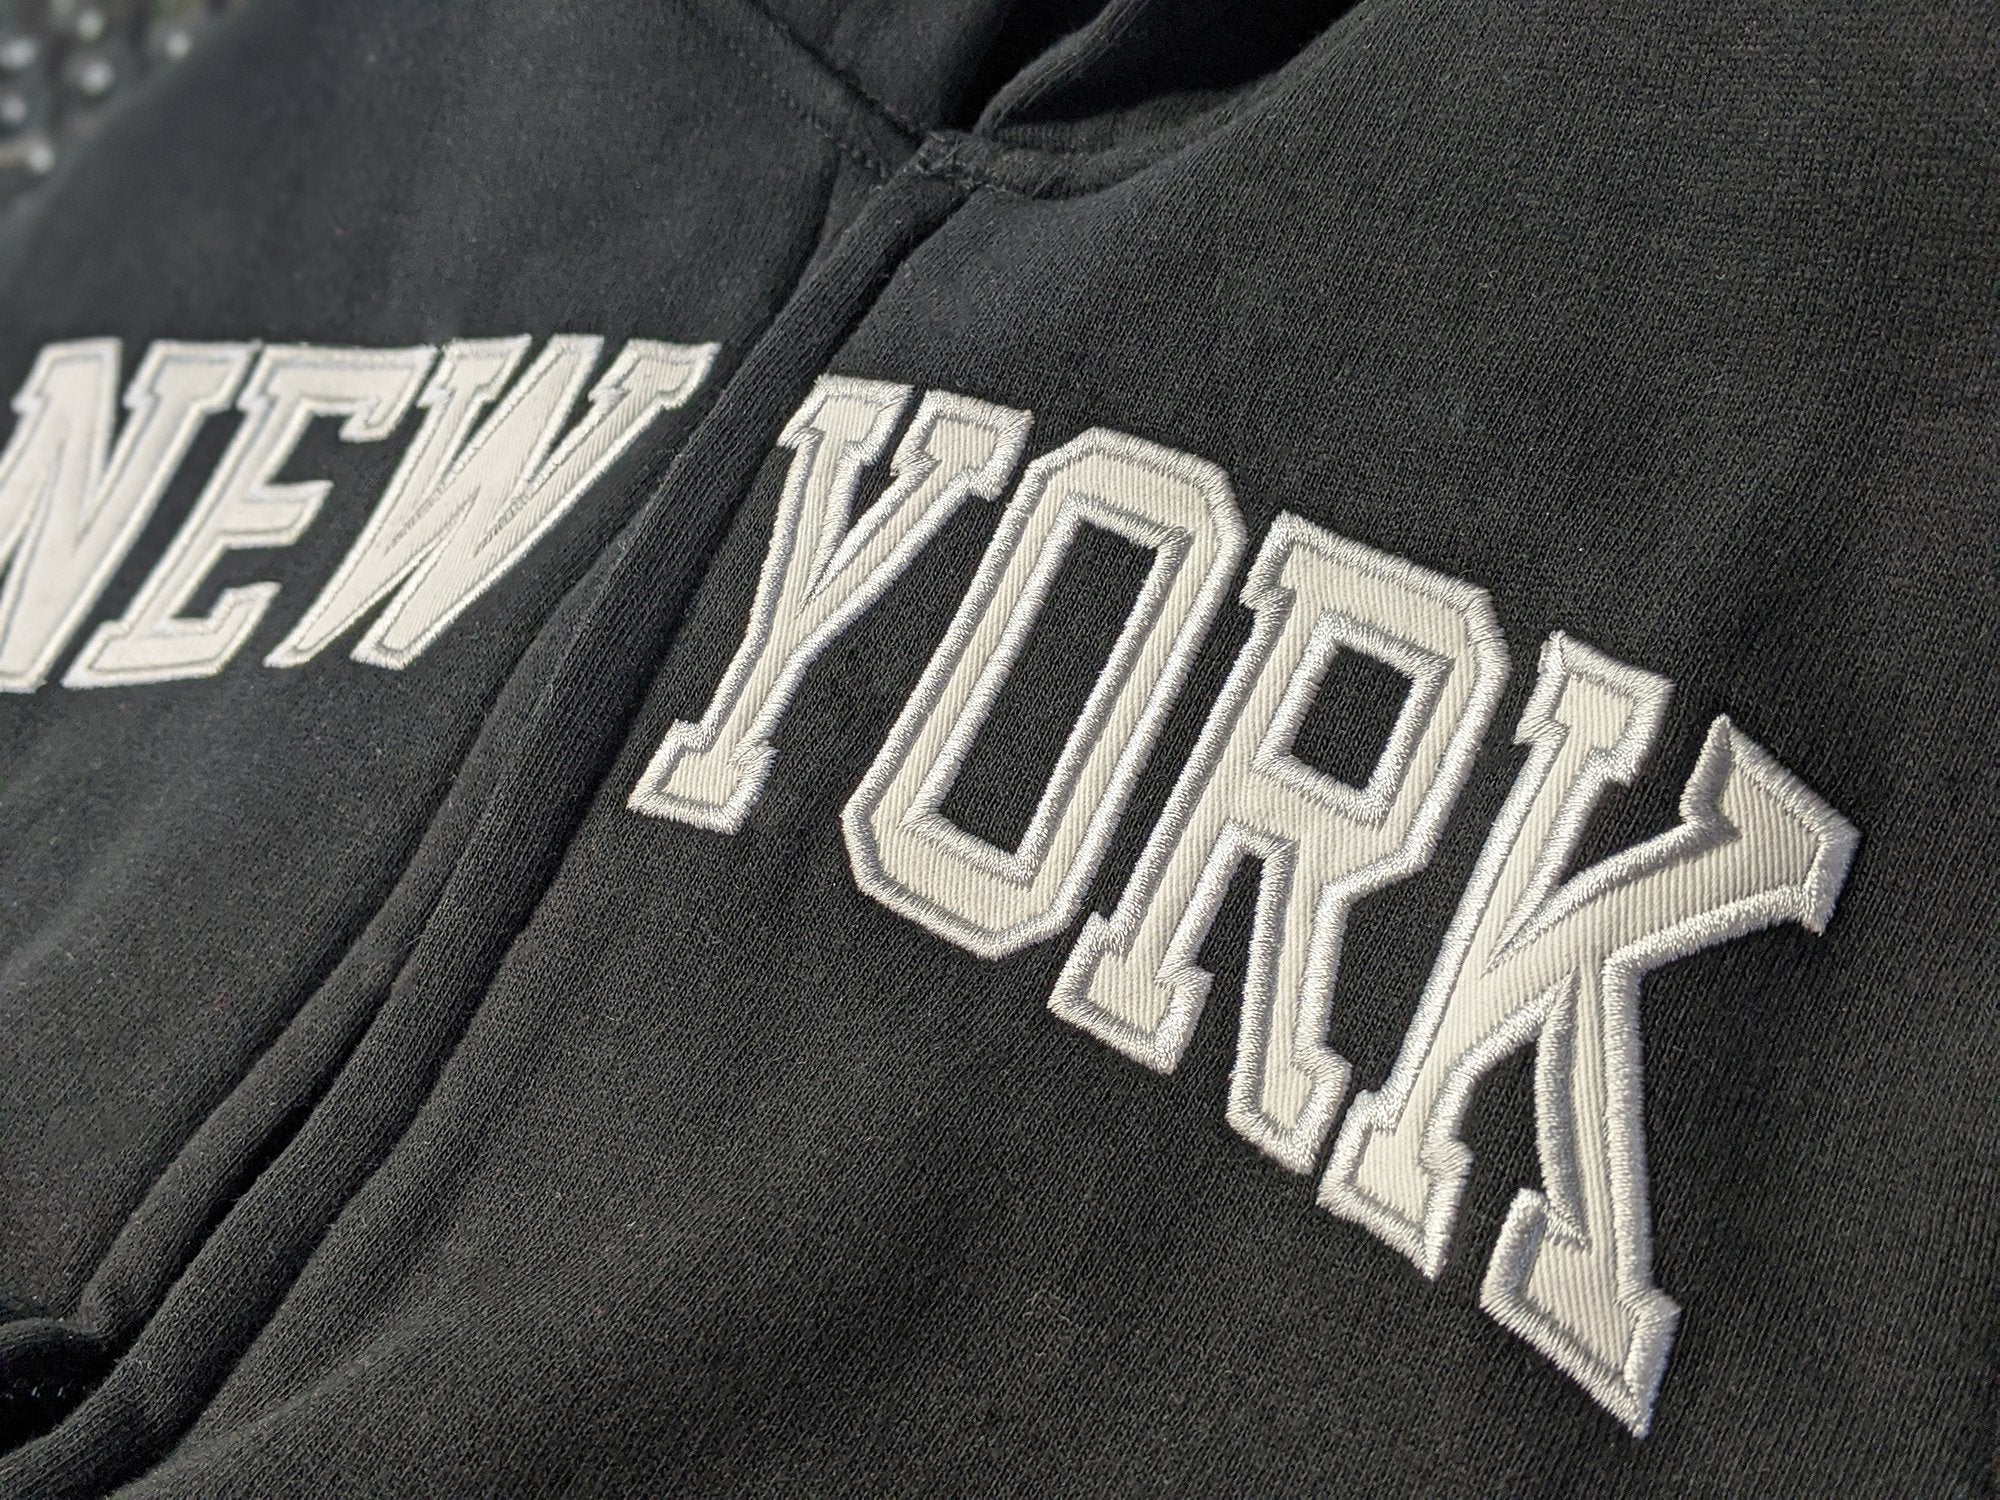 New York Yankees NY logo Distressed Vintage logo T-shirt 6 Sizes S-3XL